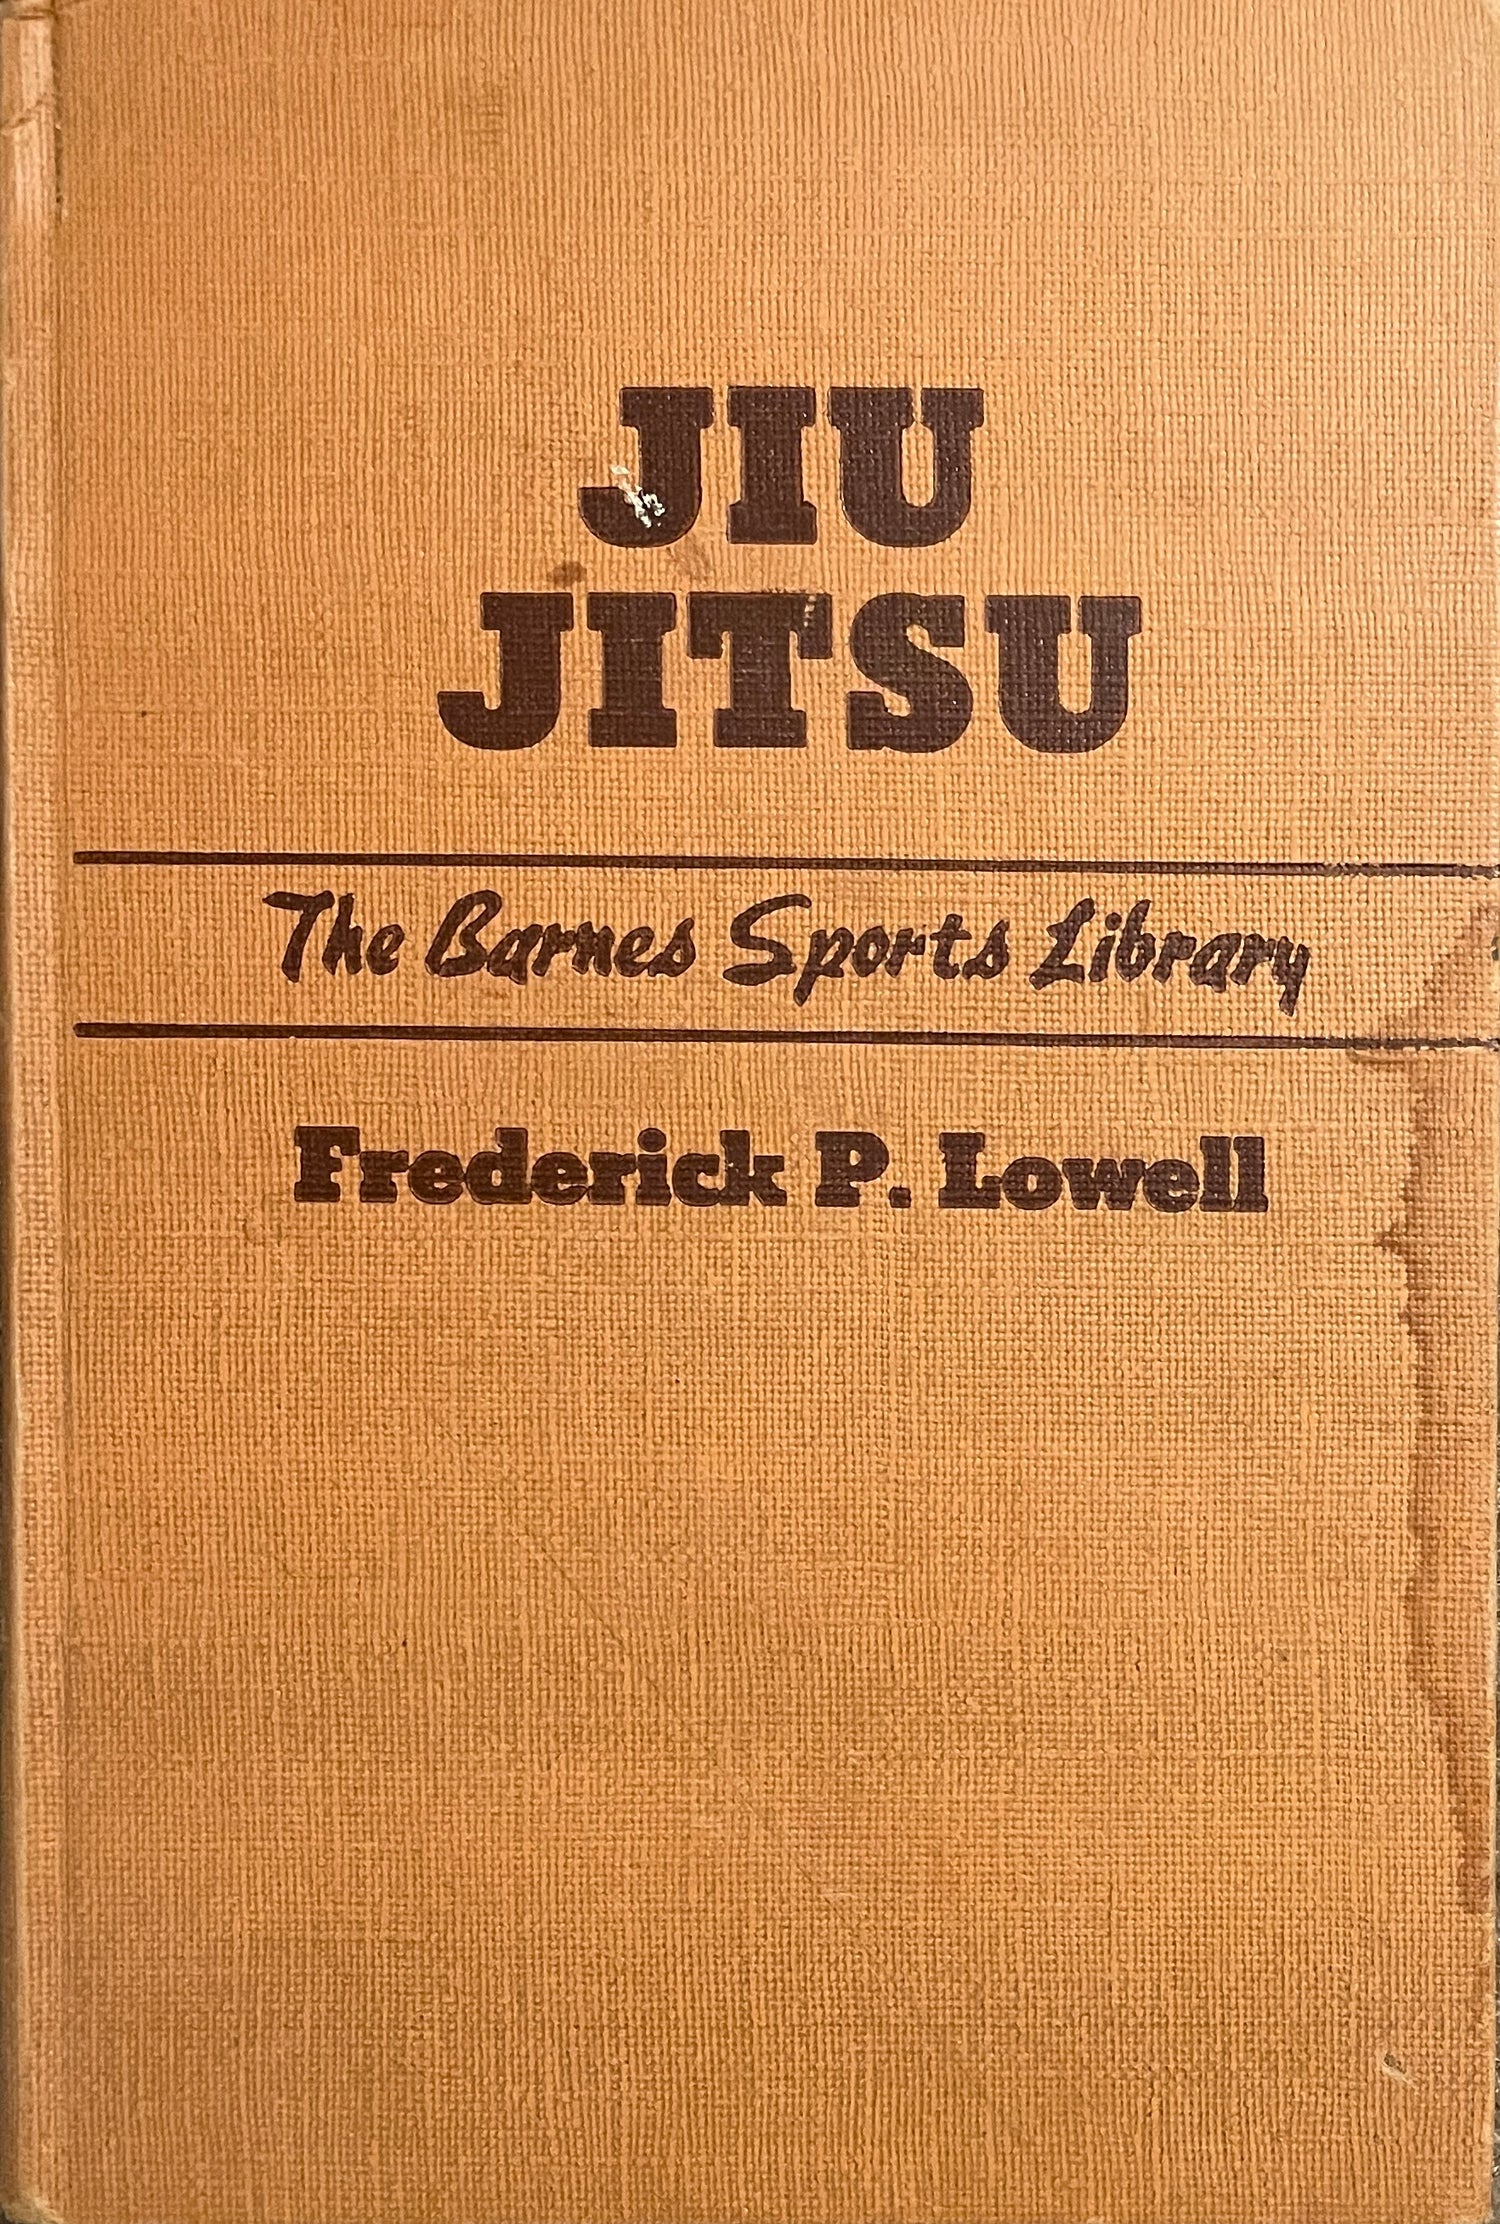 Jiu Jitsu: Barnes Sports Library Book by Frederick Lowell (ハードカバー) (中古)